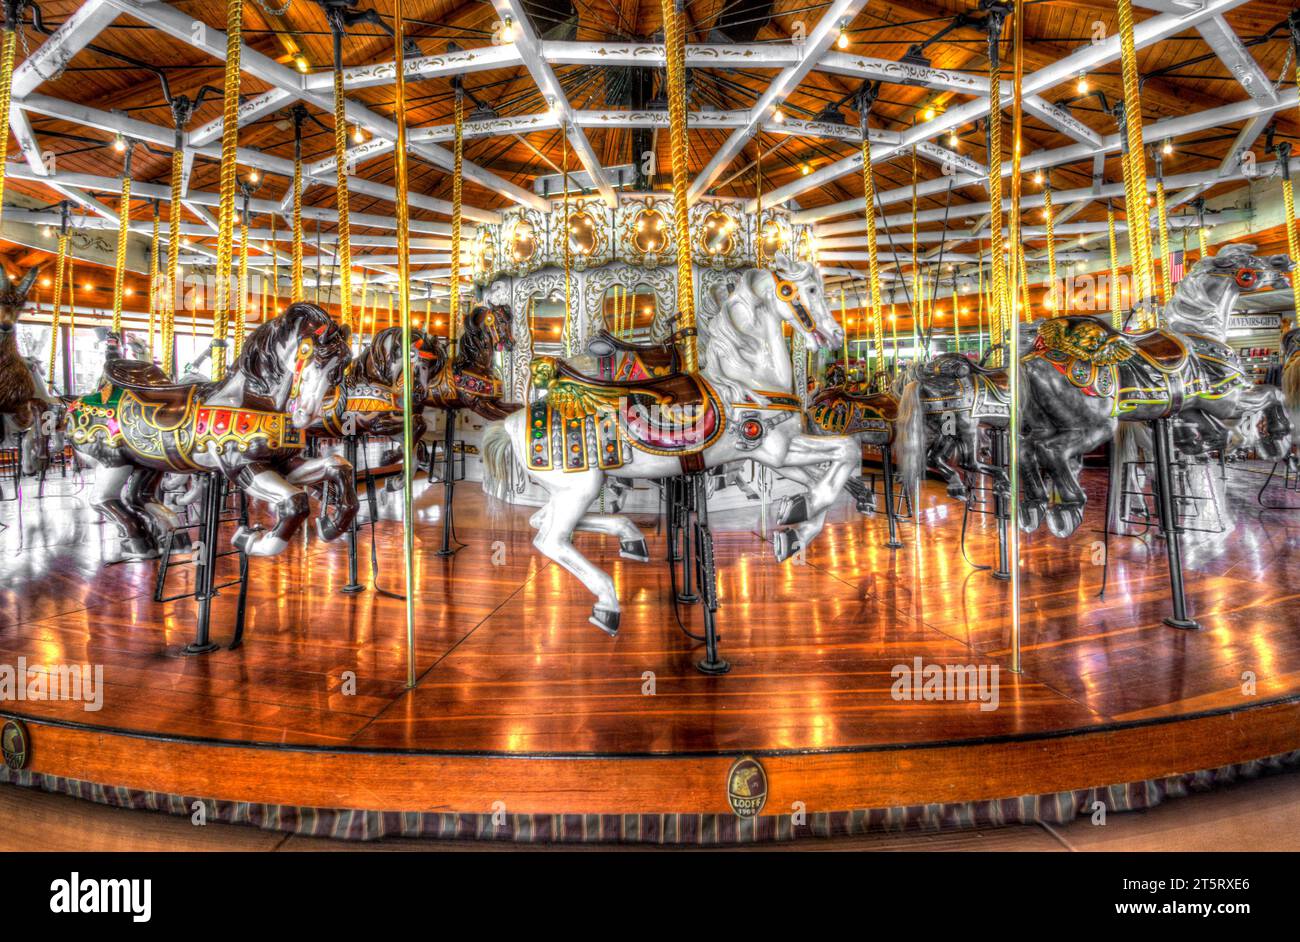 The Looff Carousel at Riverfront Park, Spokane, Washington Stock Photo